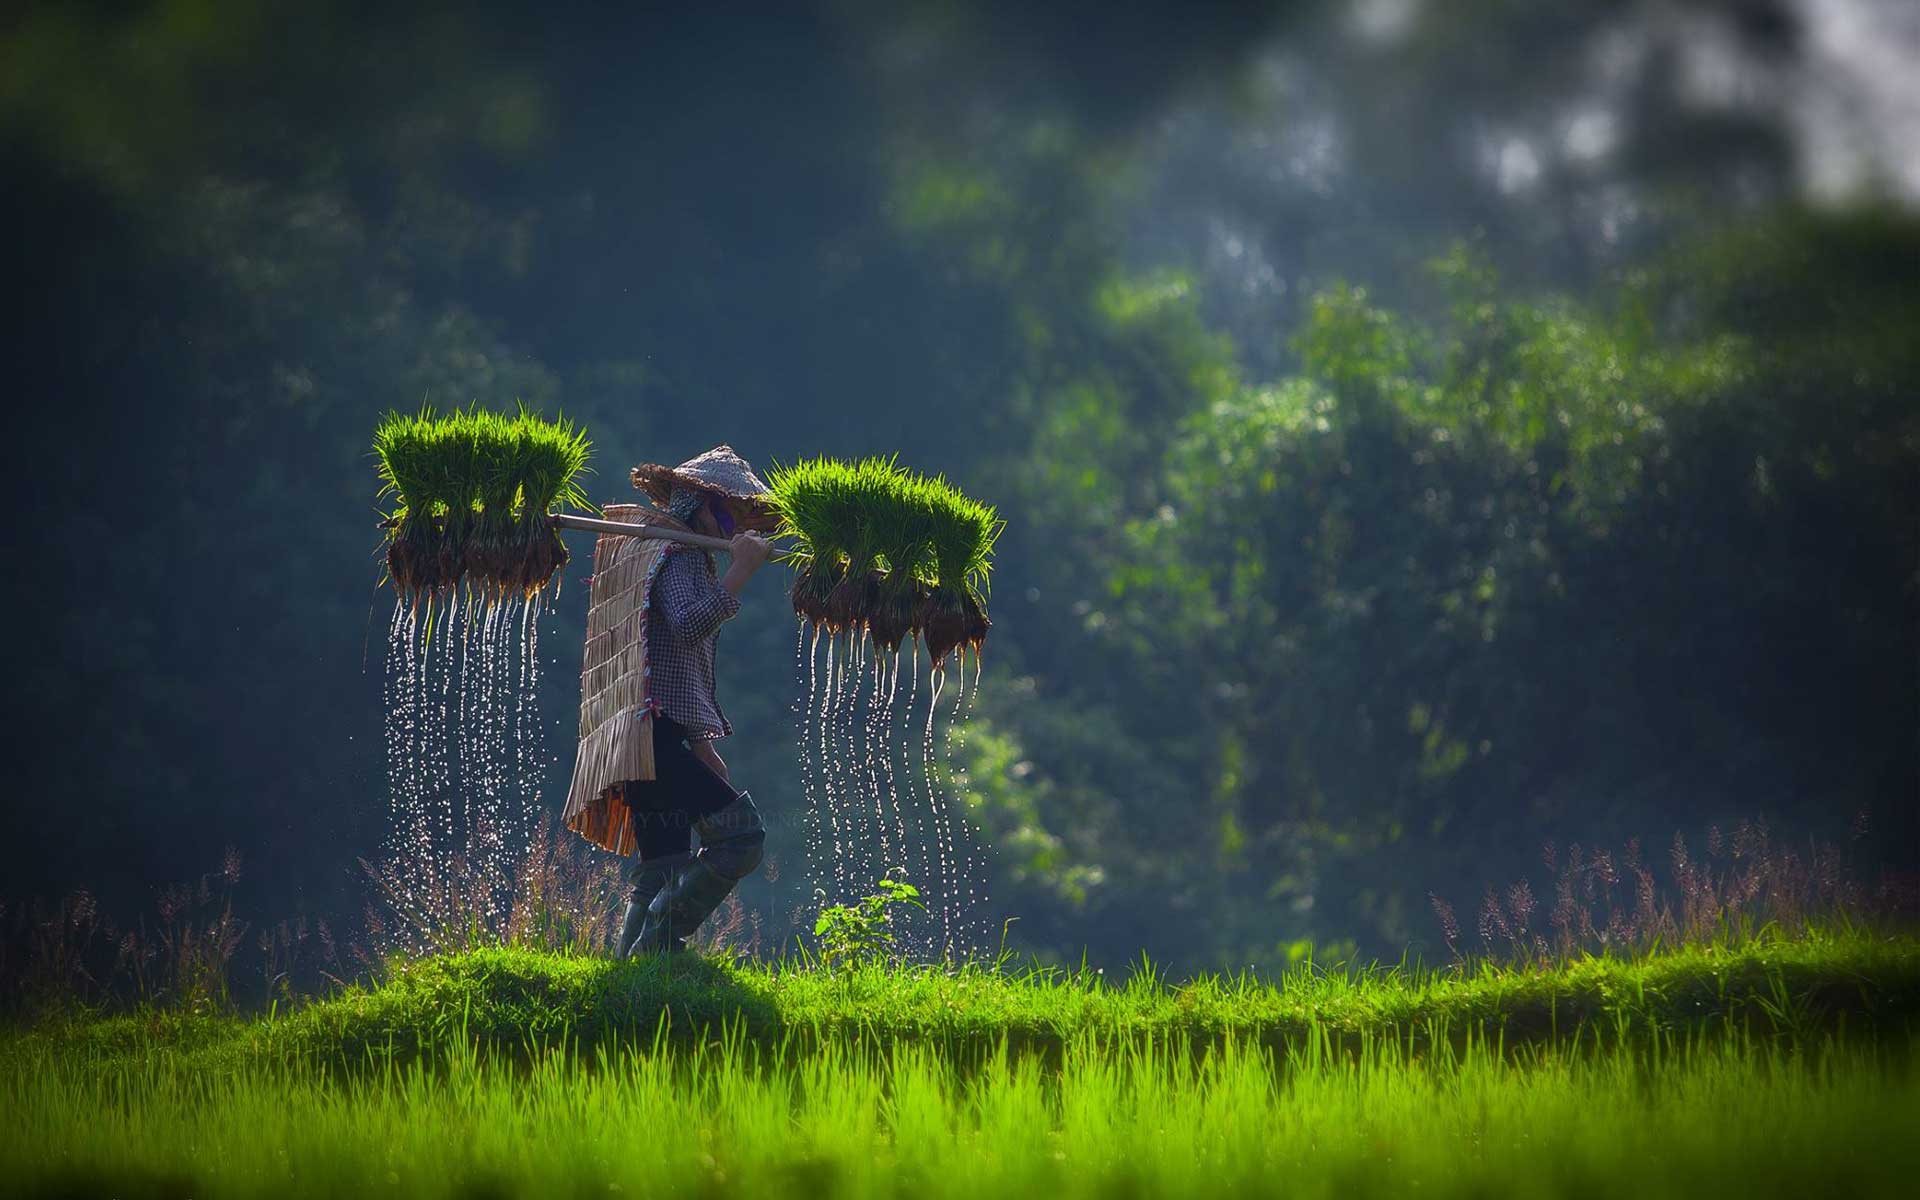 Countryside of Vietnam